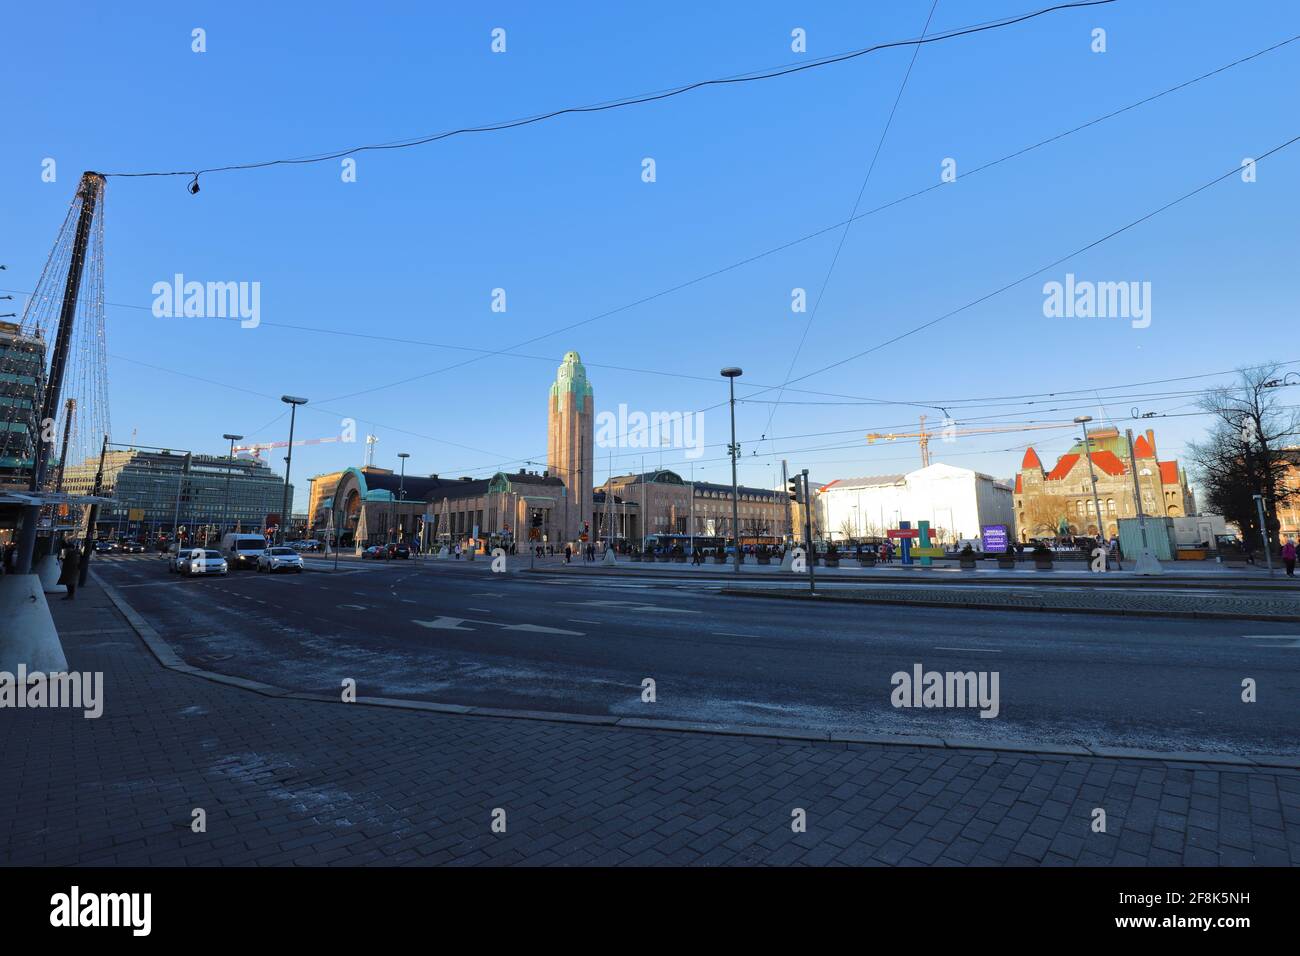 FINLAND, HELSINKI - JANUARY 04, 2020: Helsinki Railway Square Stock Photo